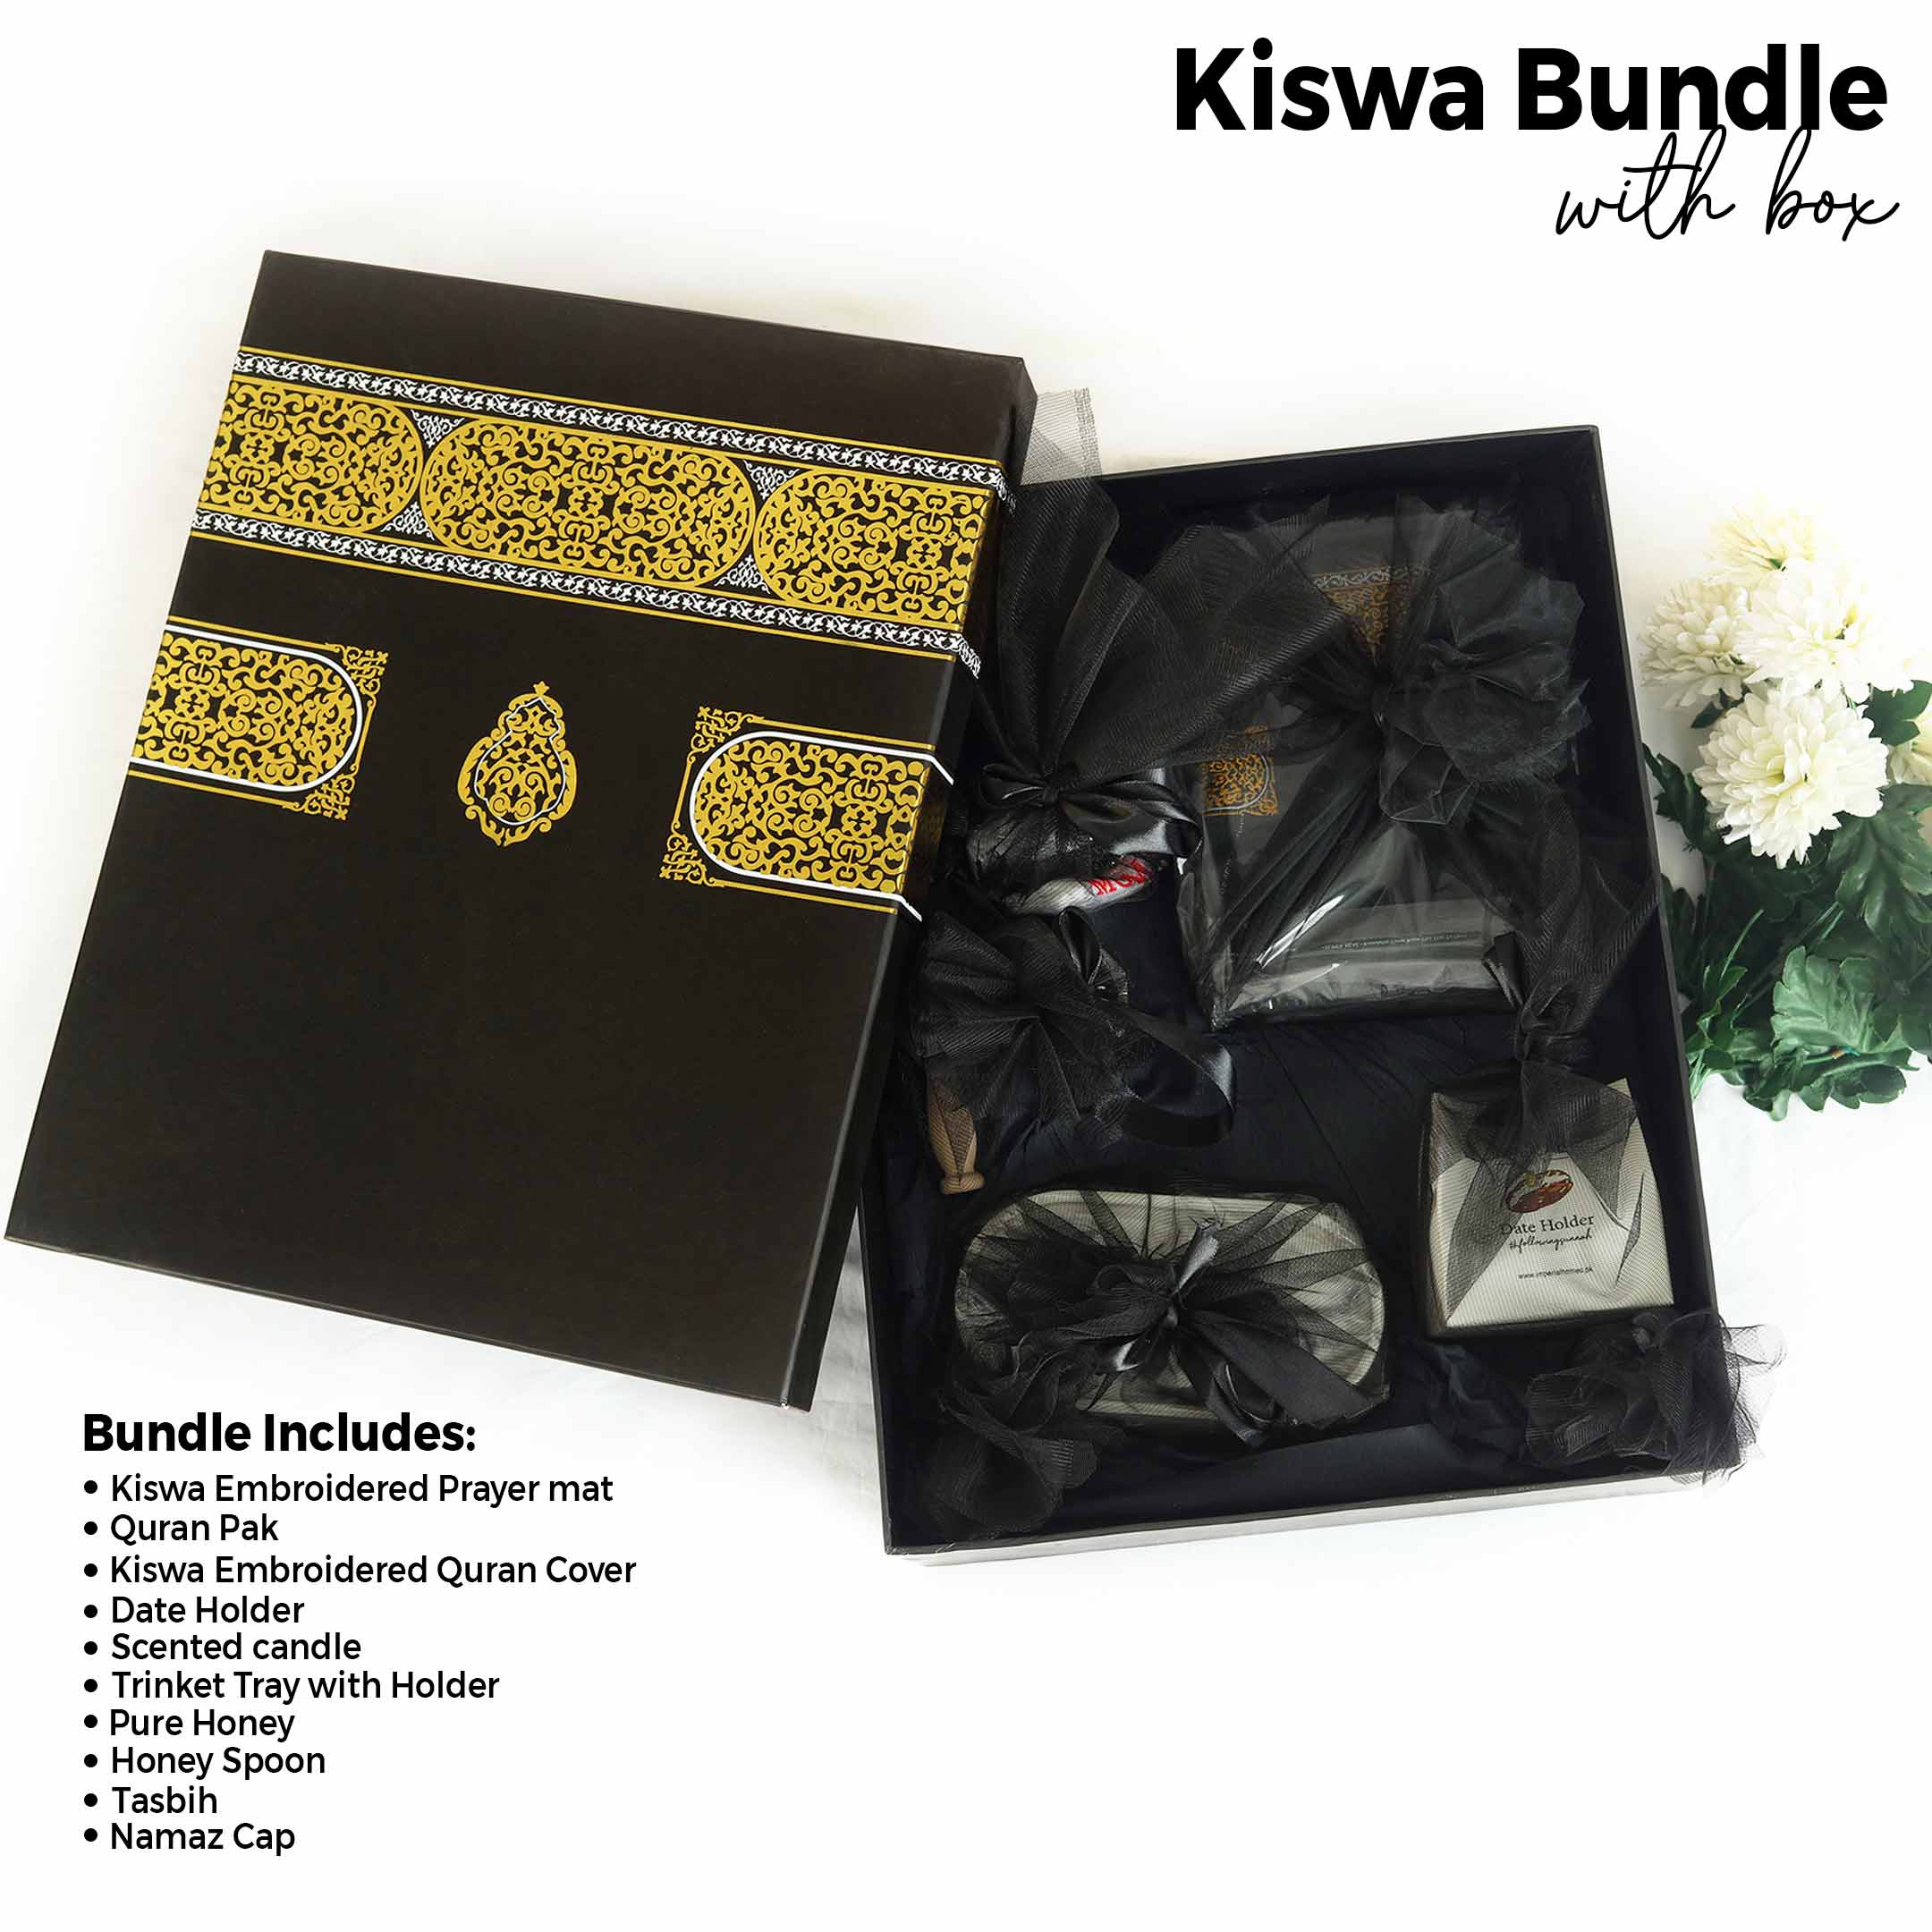 Kiswa Bundle with Box